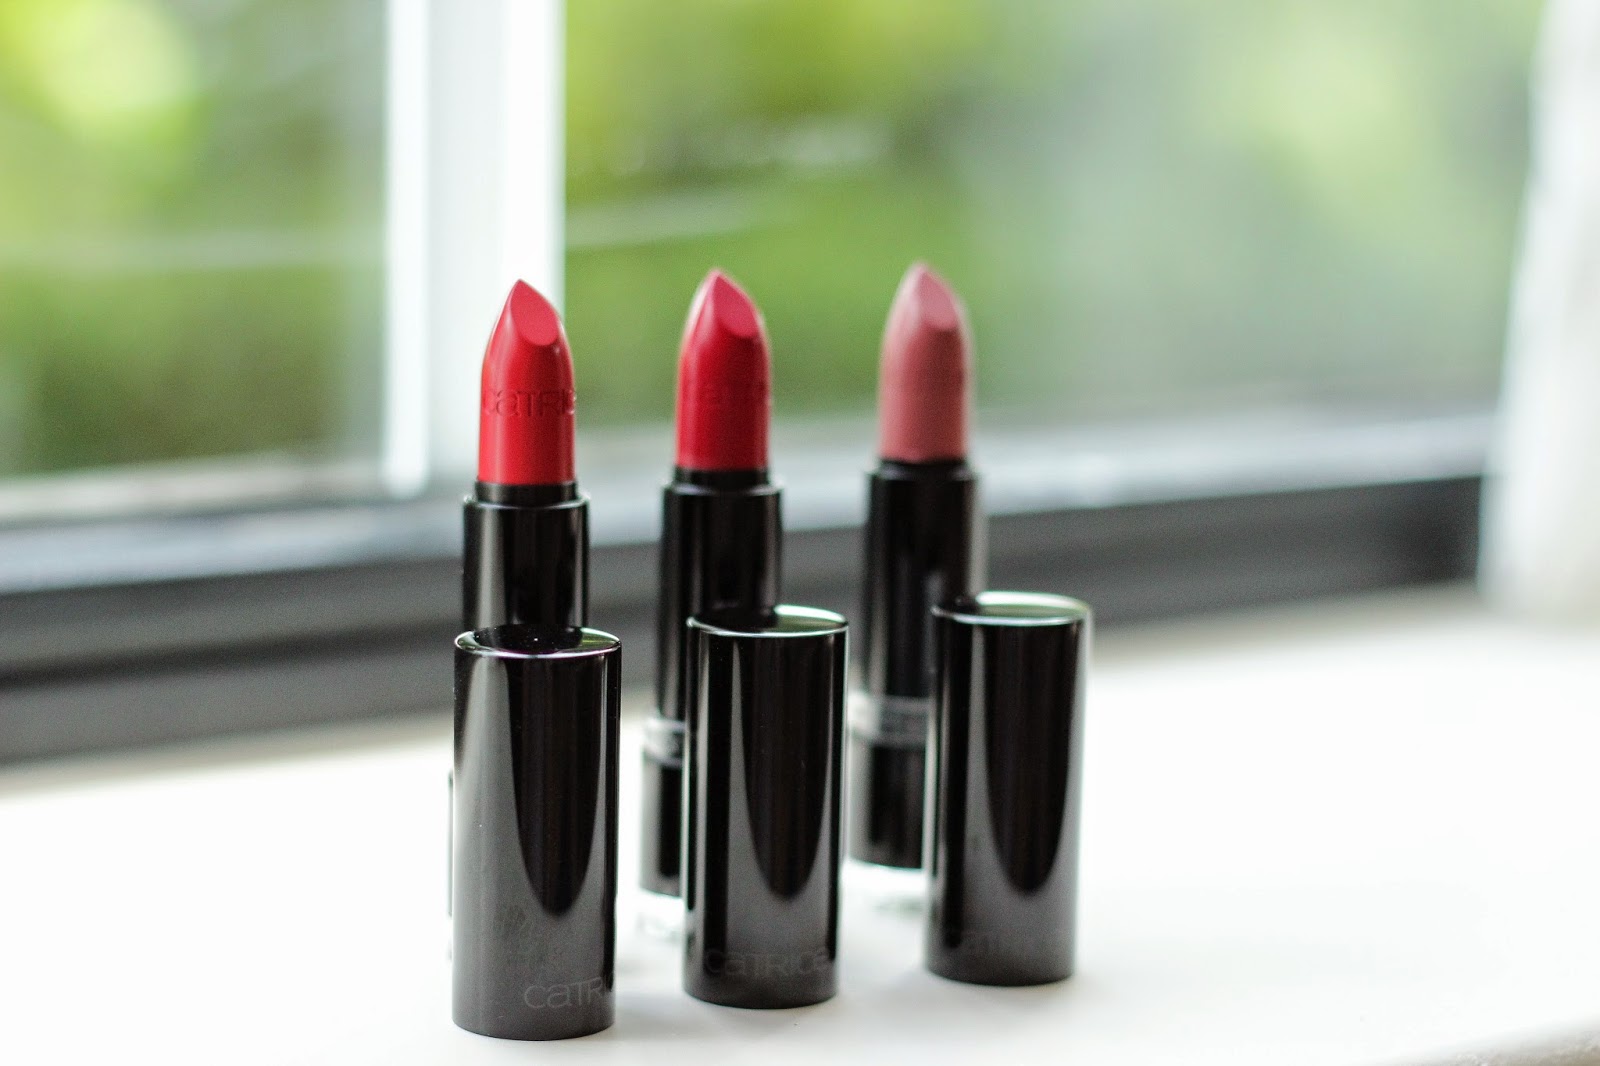 catrice ultimate colour lipstick MATTador MATTraction In A Rosegarden